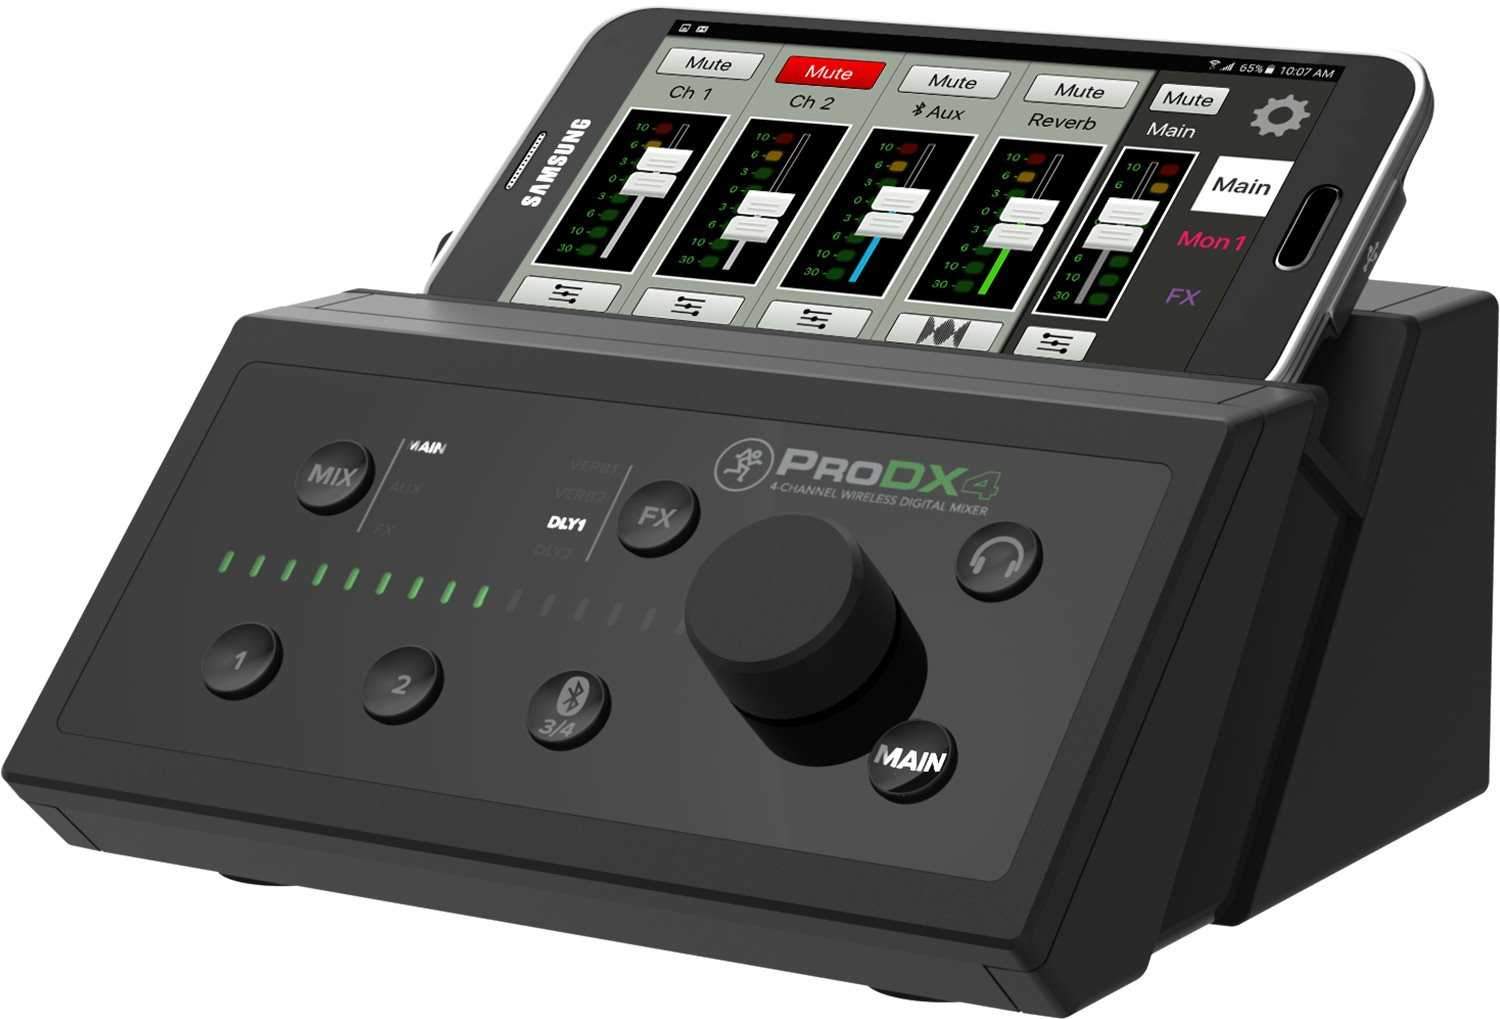 Mackie ProDX4 4-Channel Wireless Digital Mixer - PSSL ProSound and Stage Lighting